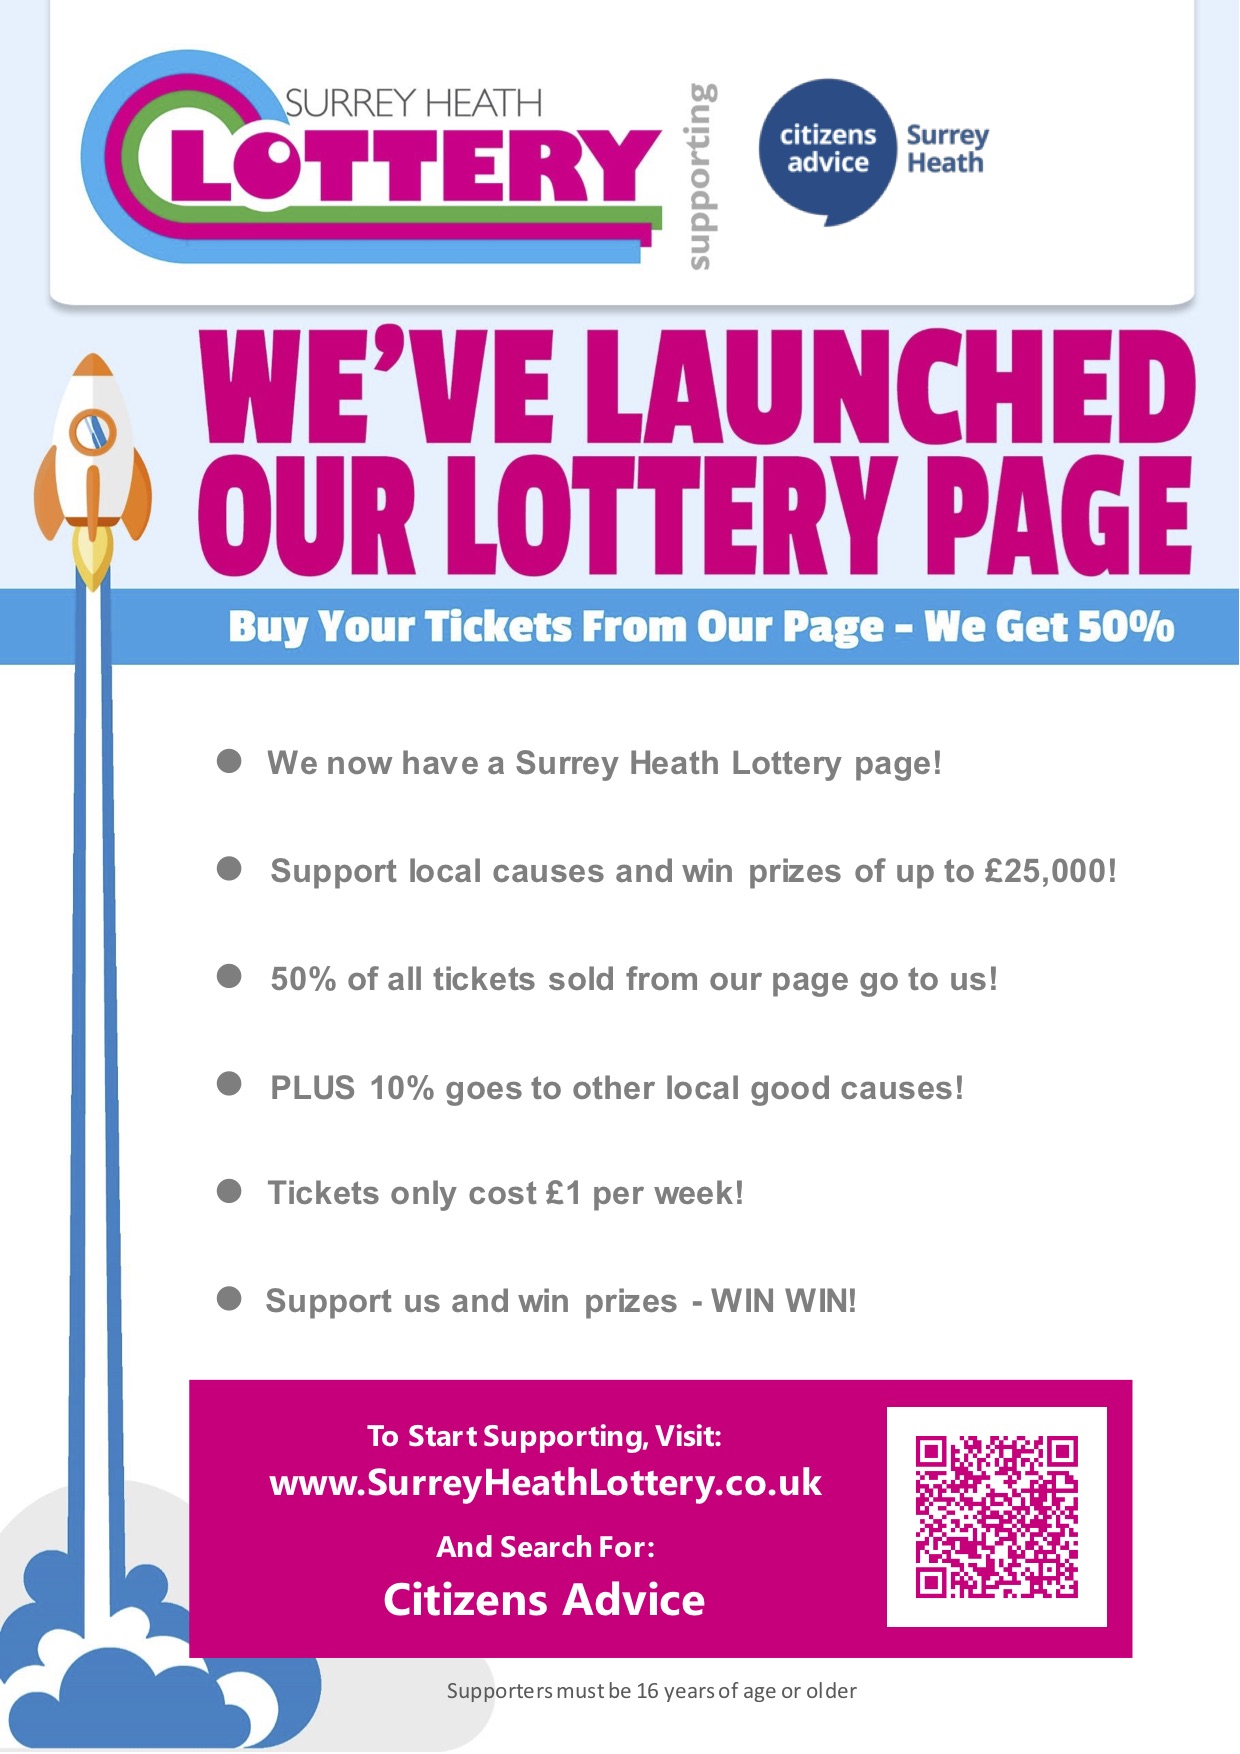 Surrey Heath lottery page